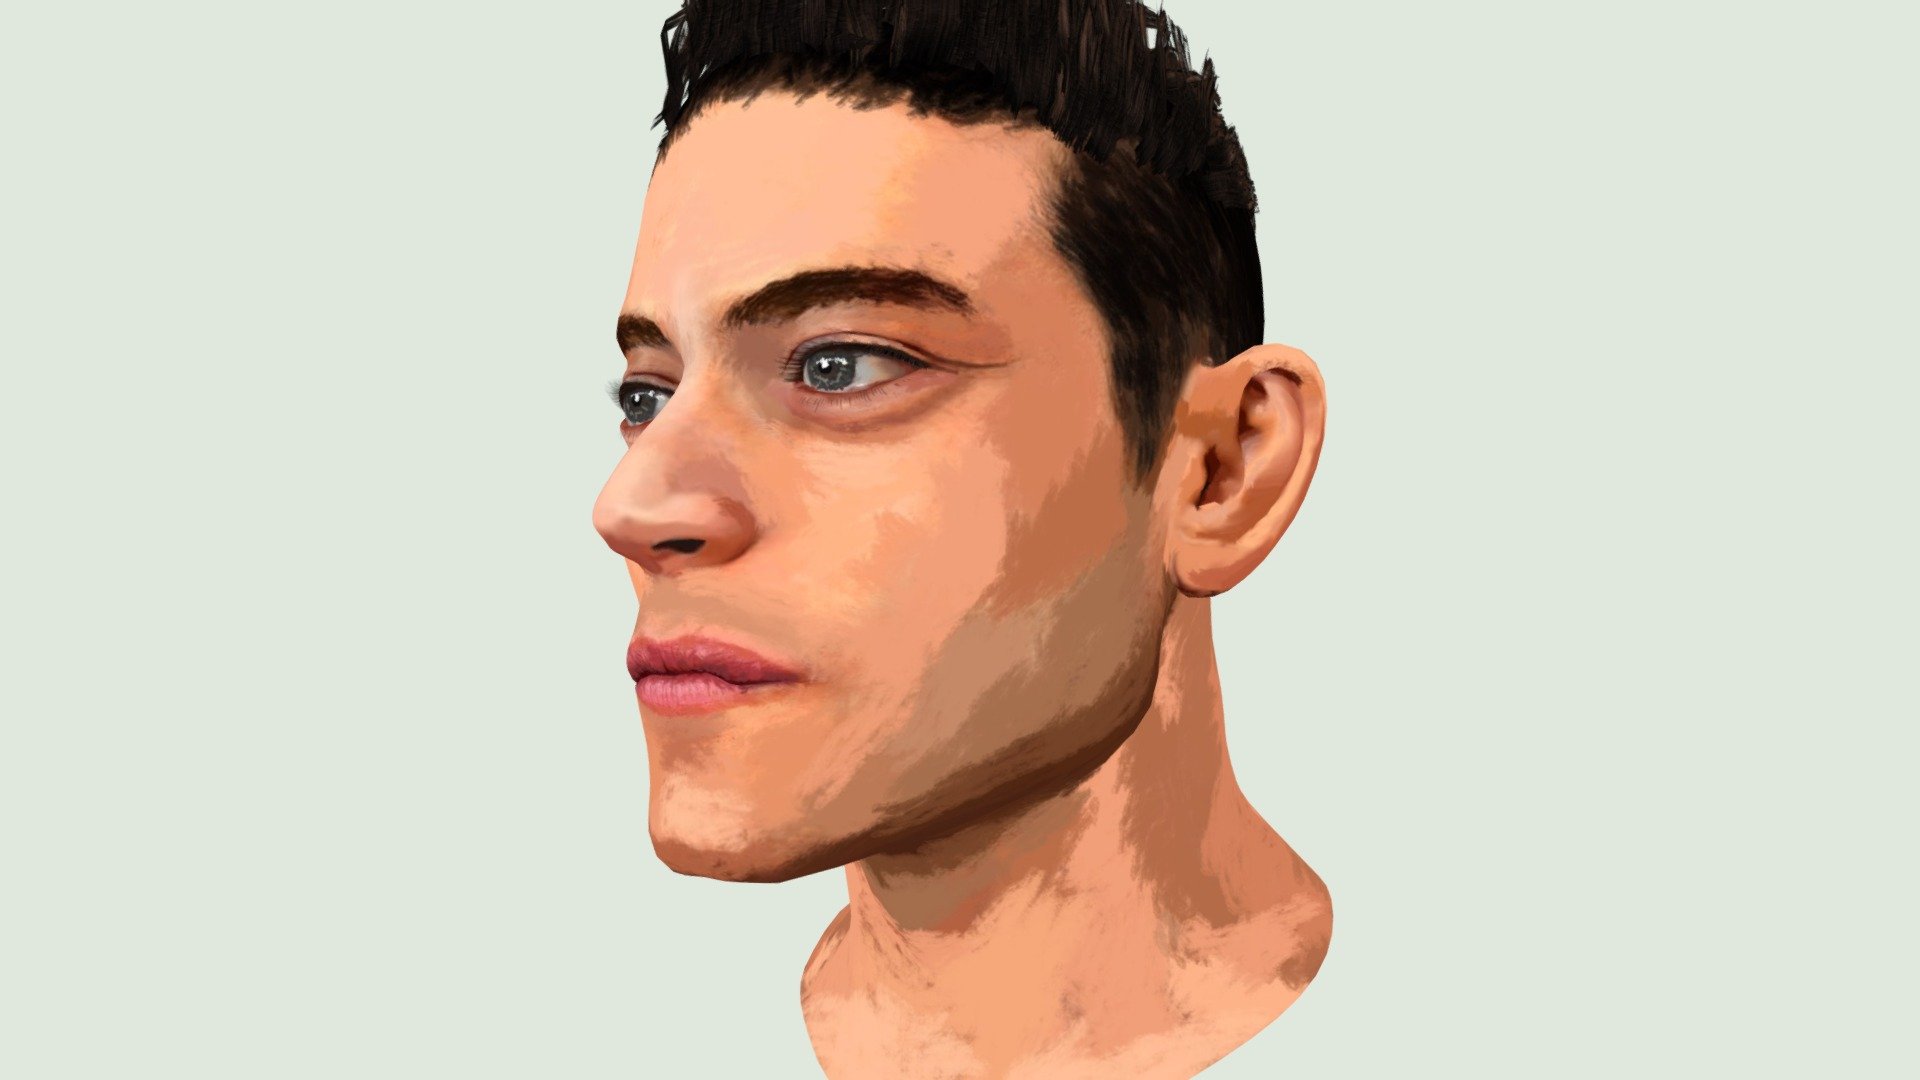 Elliot Alderson's Rami Malek Sketch by miguelromeral on DeviantArt